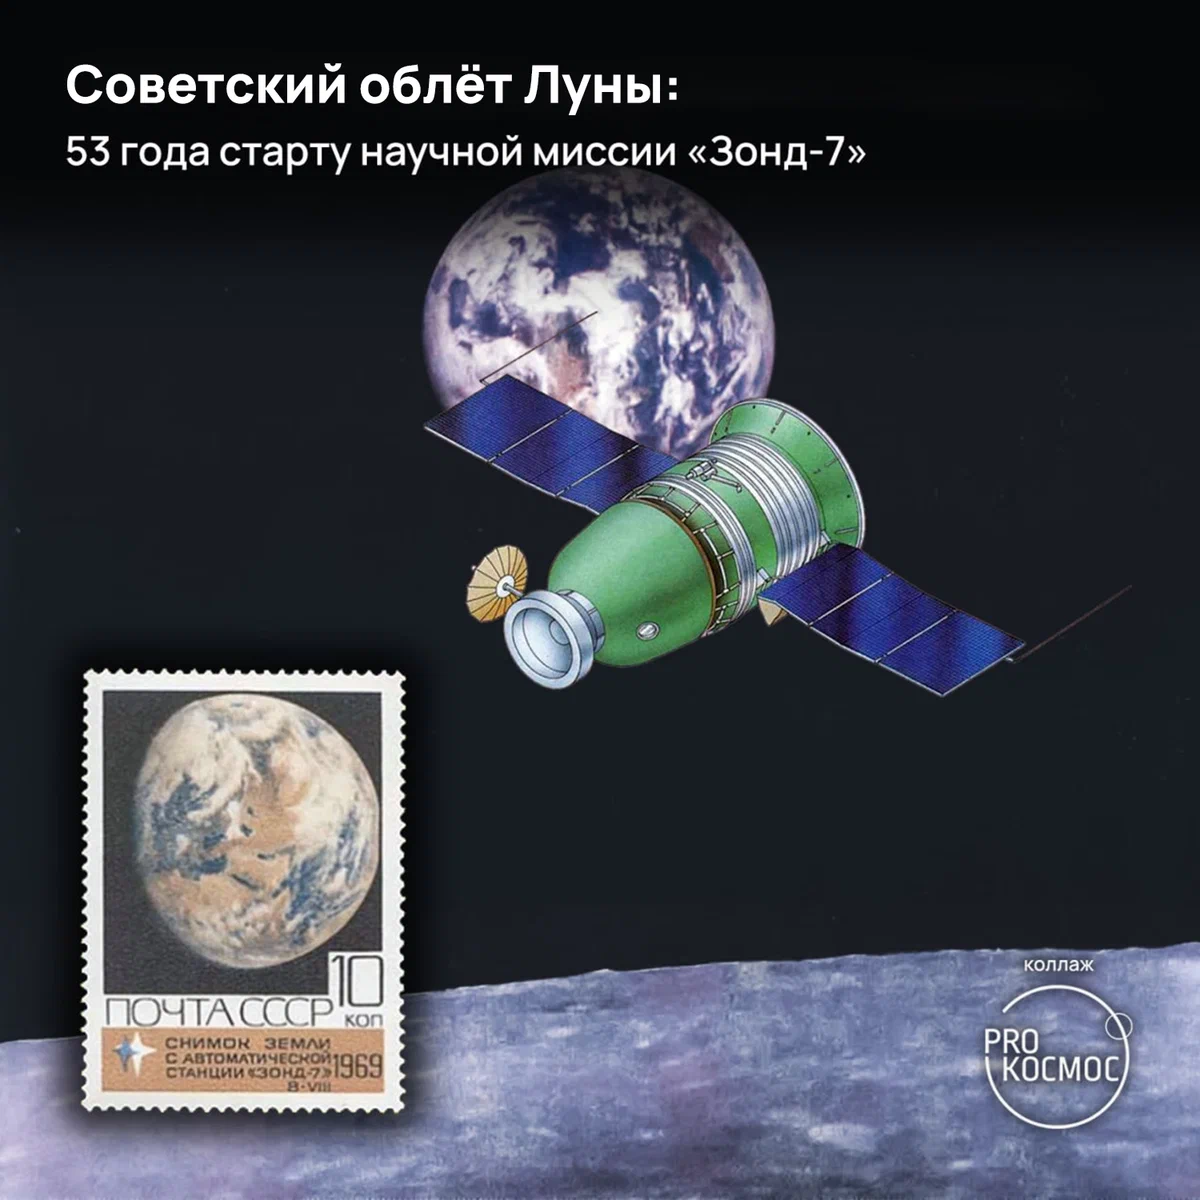 Советский облёт Луны: 53 года старту научной миссии «Зонд-7»⁠⁠ height=1200px width=1200px